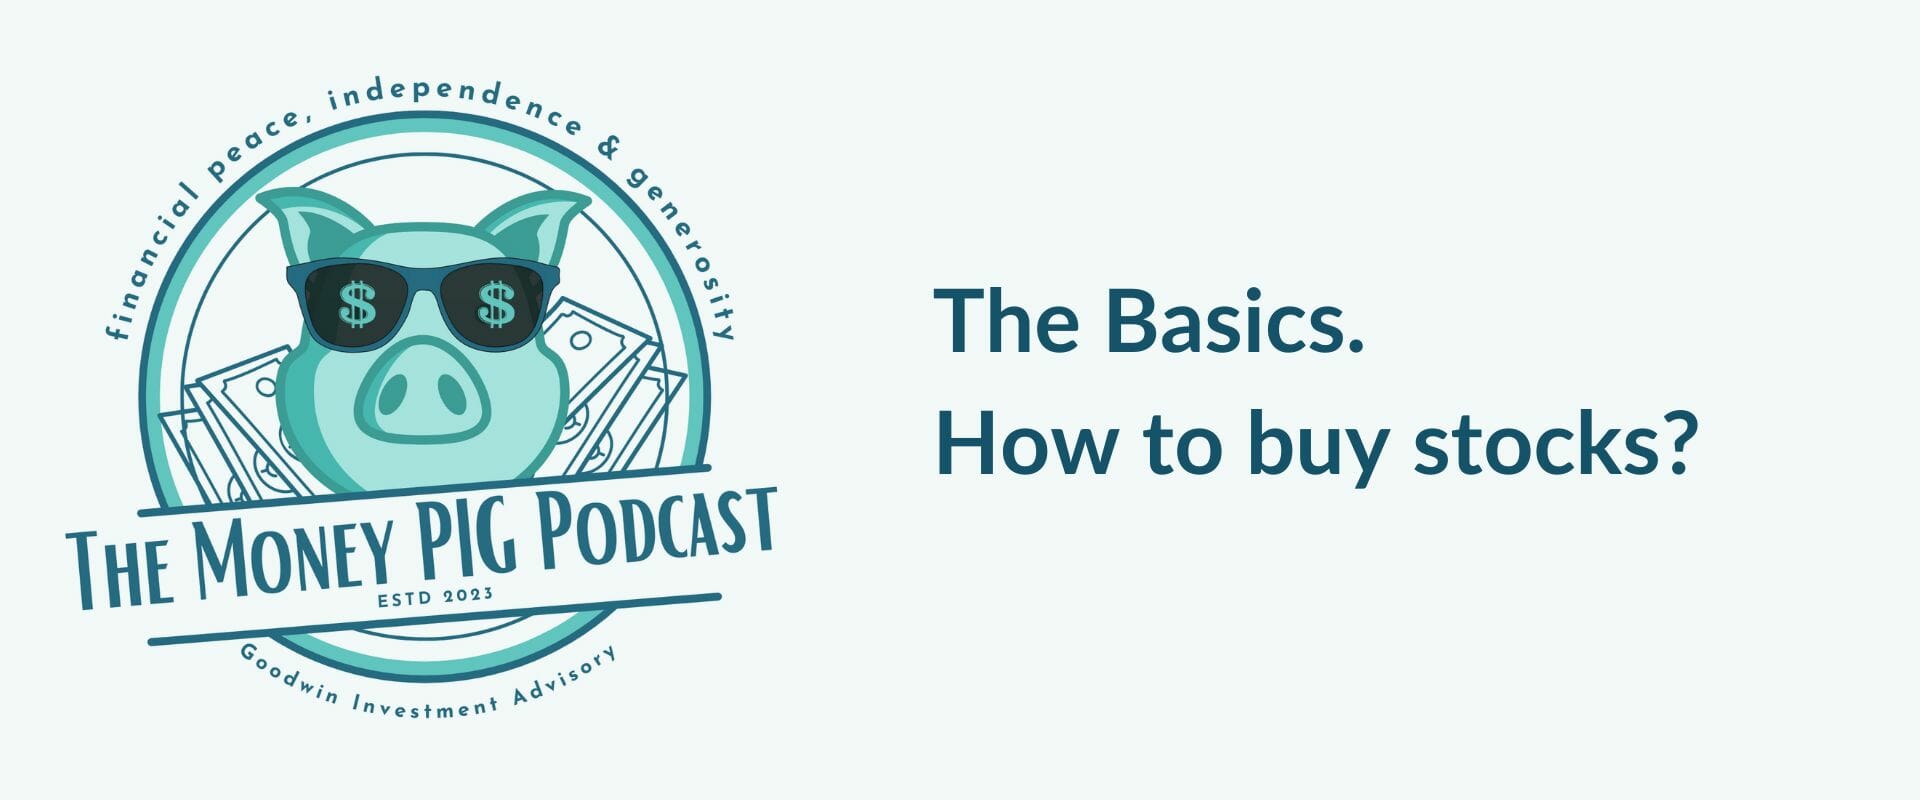 The Basics. How to buy stocks?